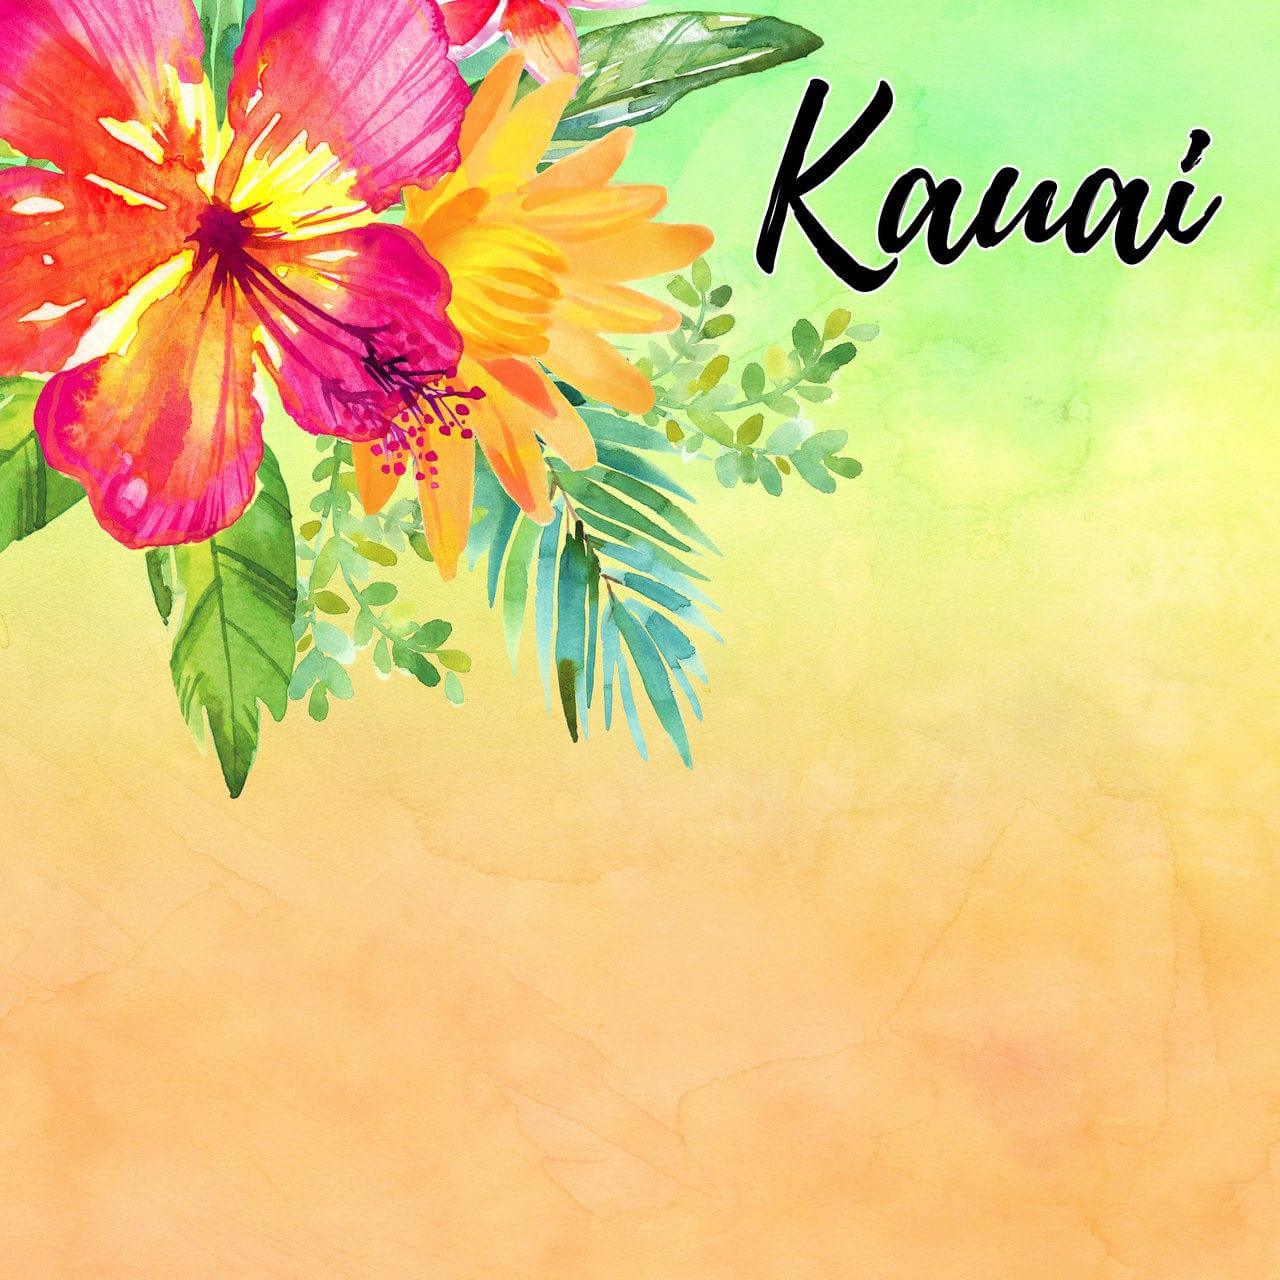 Getaway Collection Kauai, Hawaii 12 x 12 Double-Sided Scrapbook Paper by Scrapbook Customs - Scrapbook Supply Companies